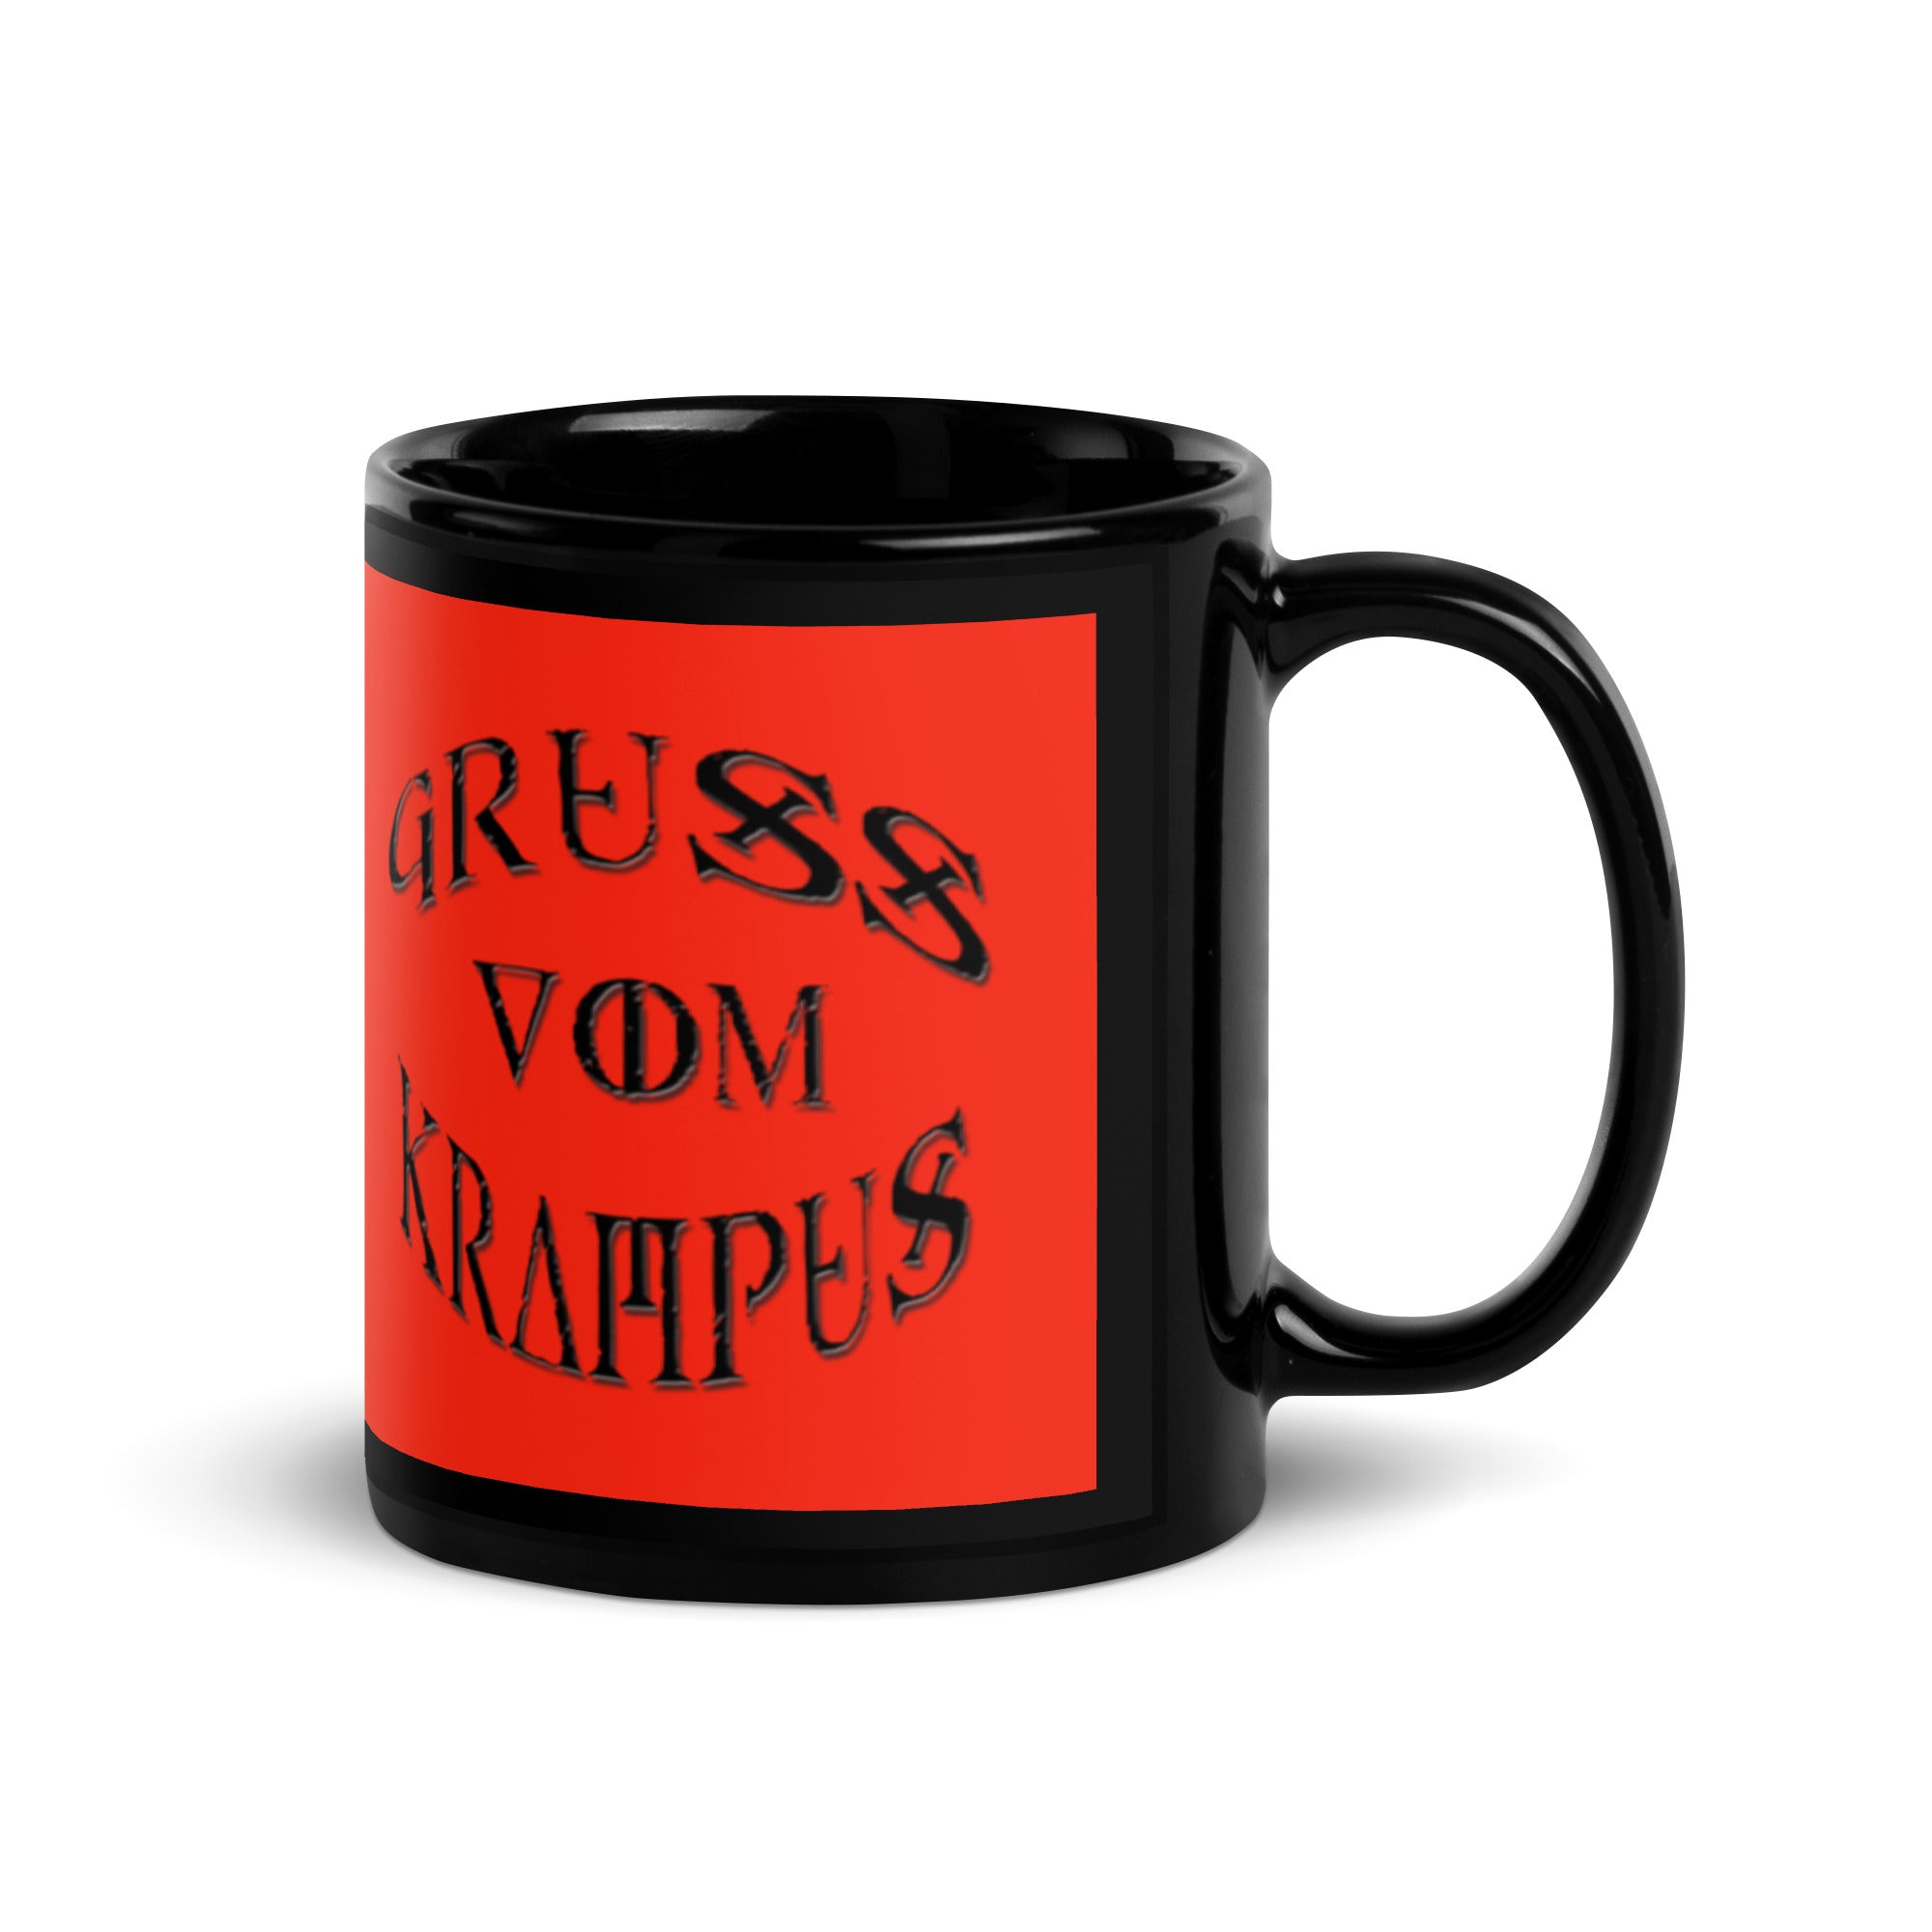 Gruss Von Krampus Christmas Demon Black Glossy Mug - Edge of Life Designs